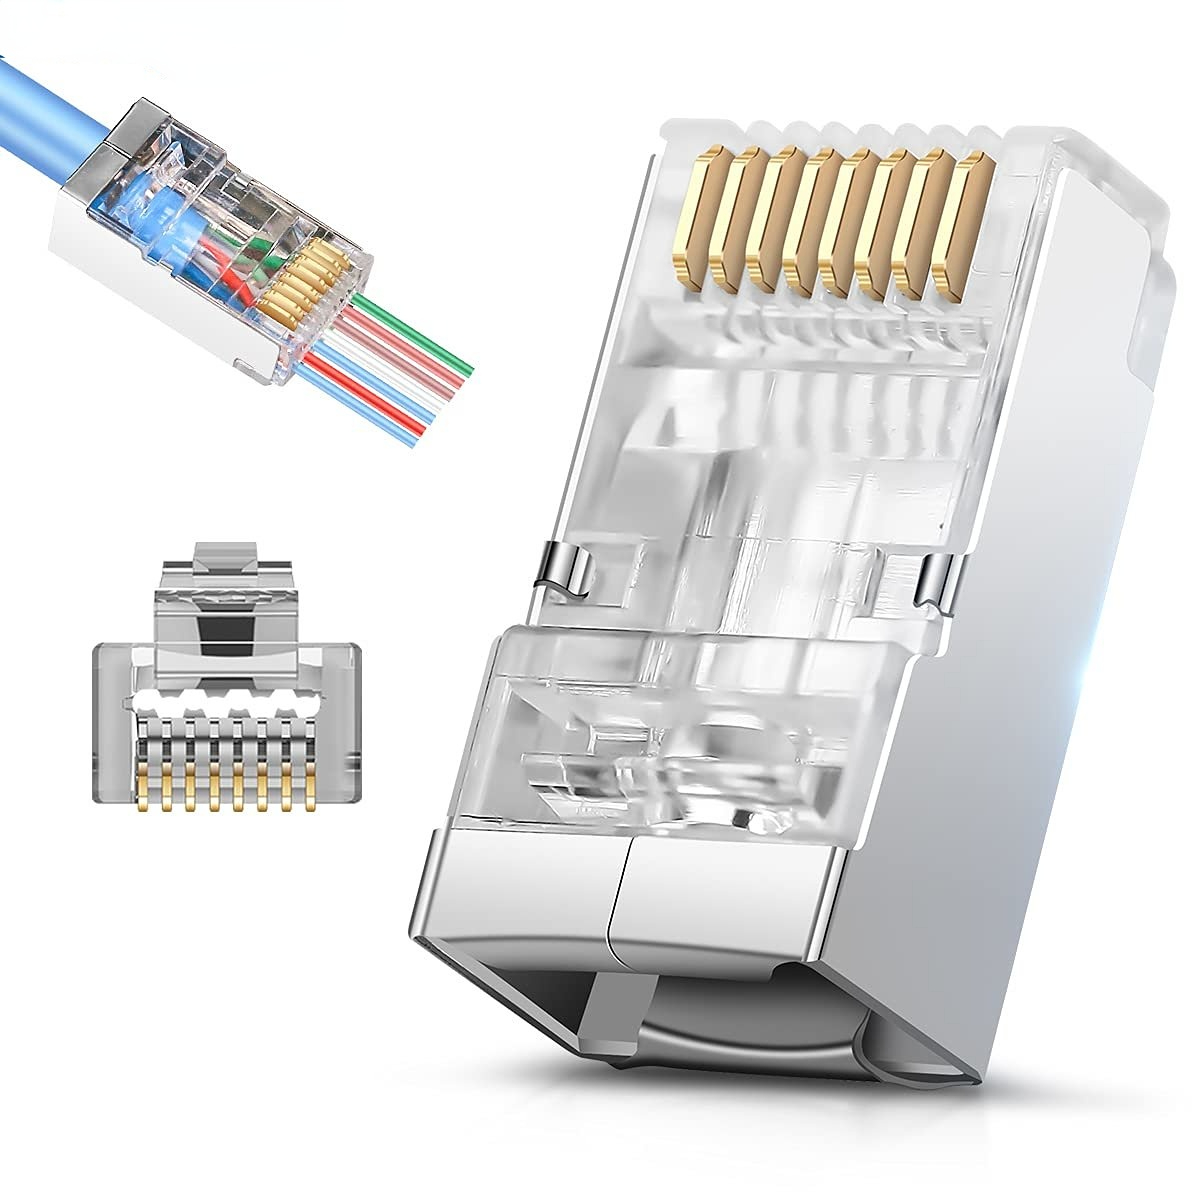 Conector Plug RJ45 Blindado Para Cable UTP - Ja-Bots